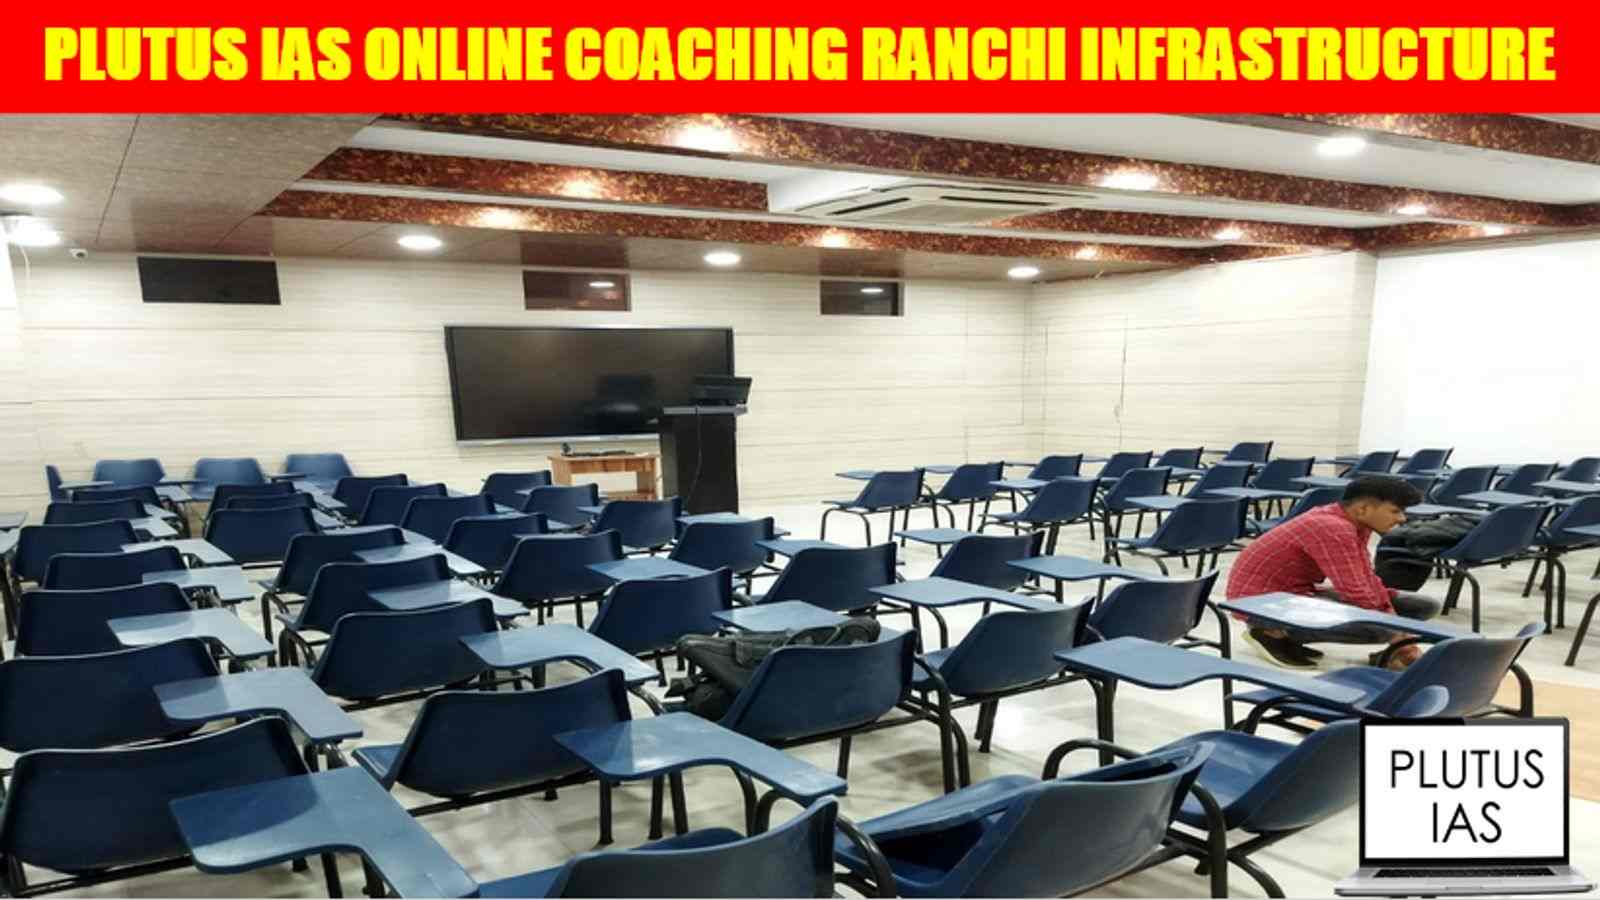 Plutus IAS Online Coaching Ranchi Infrastructure